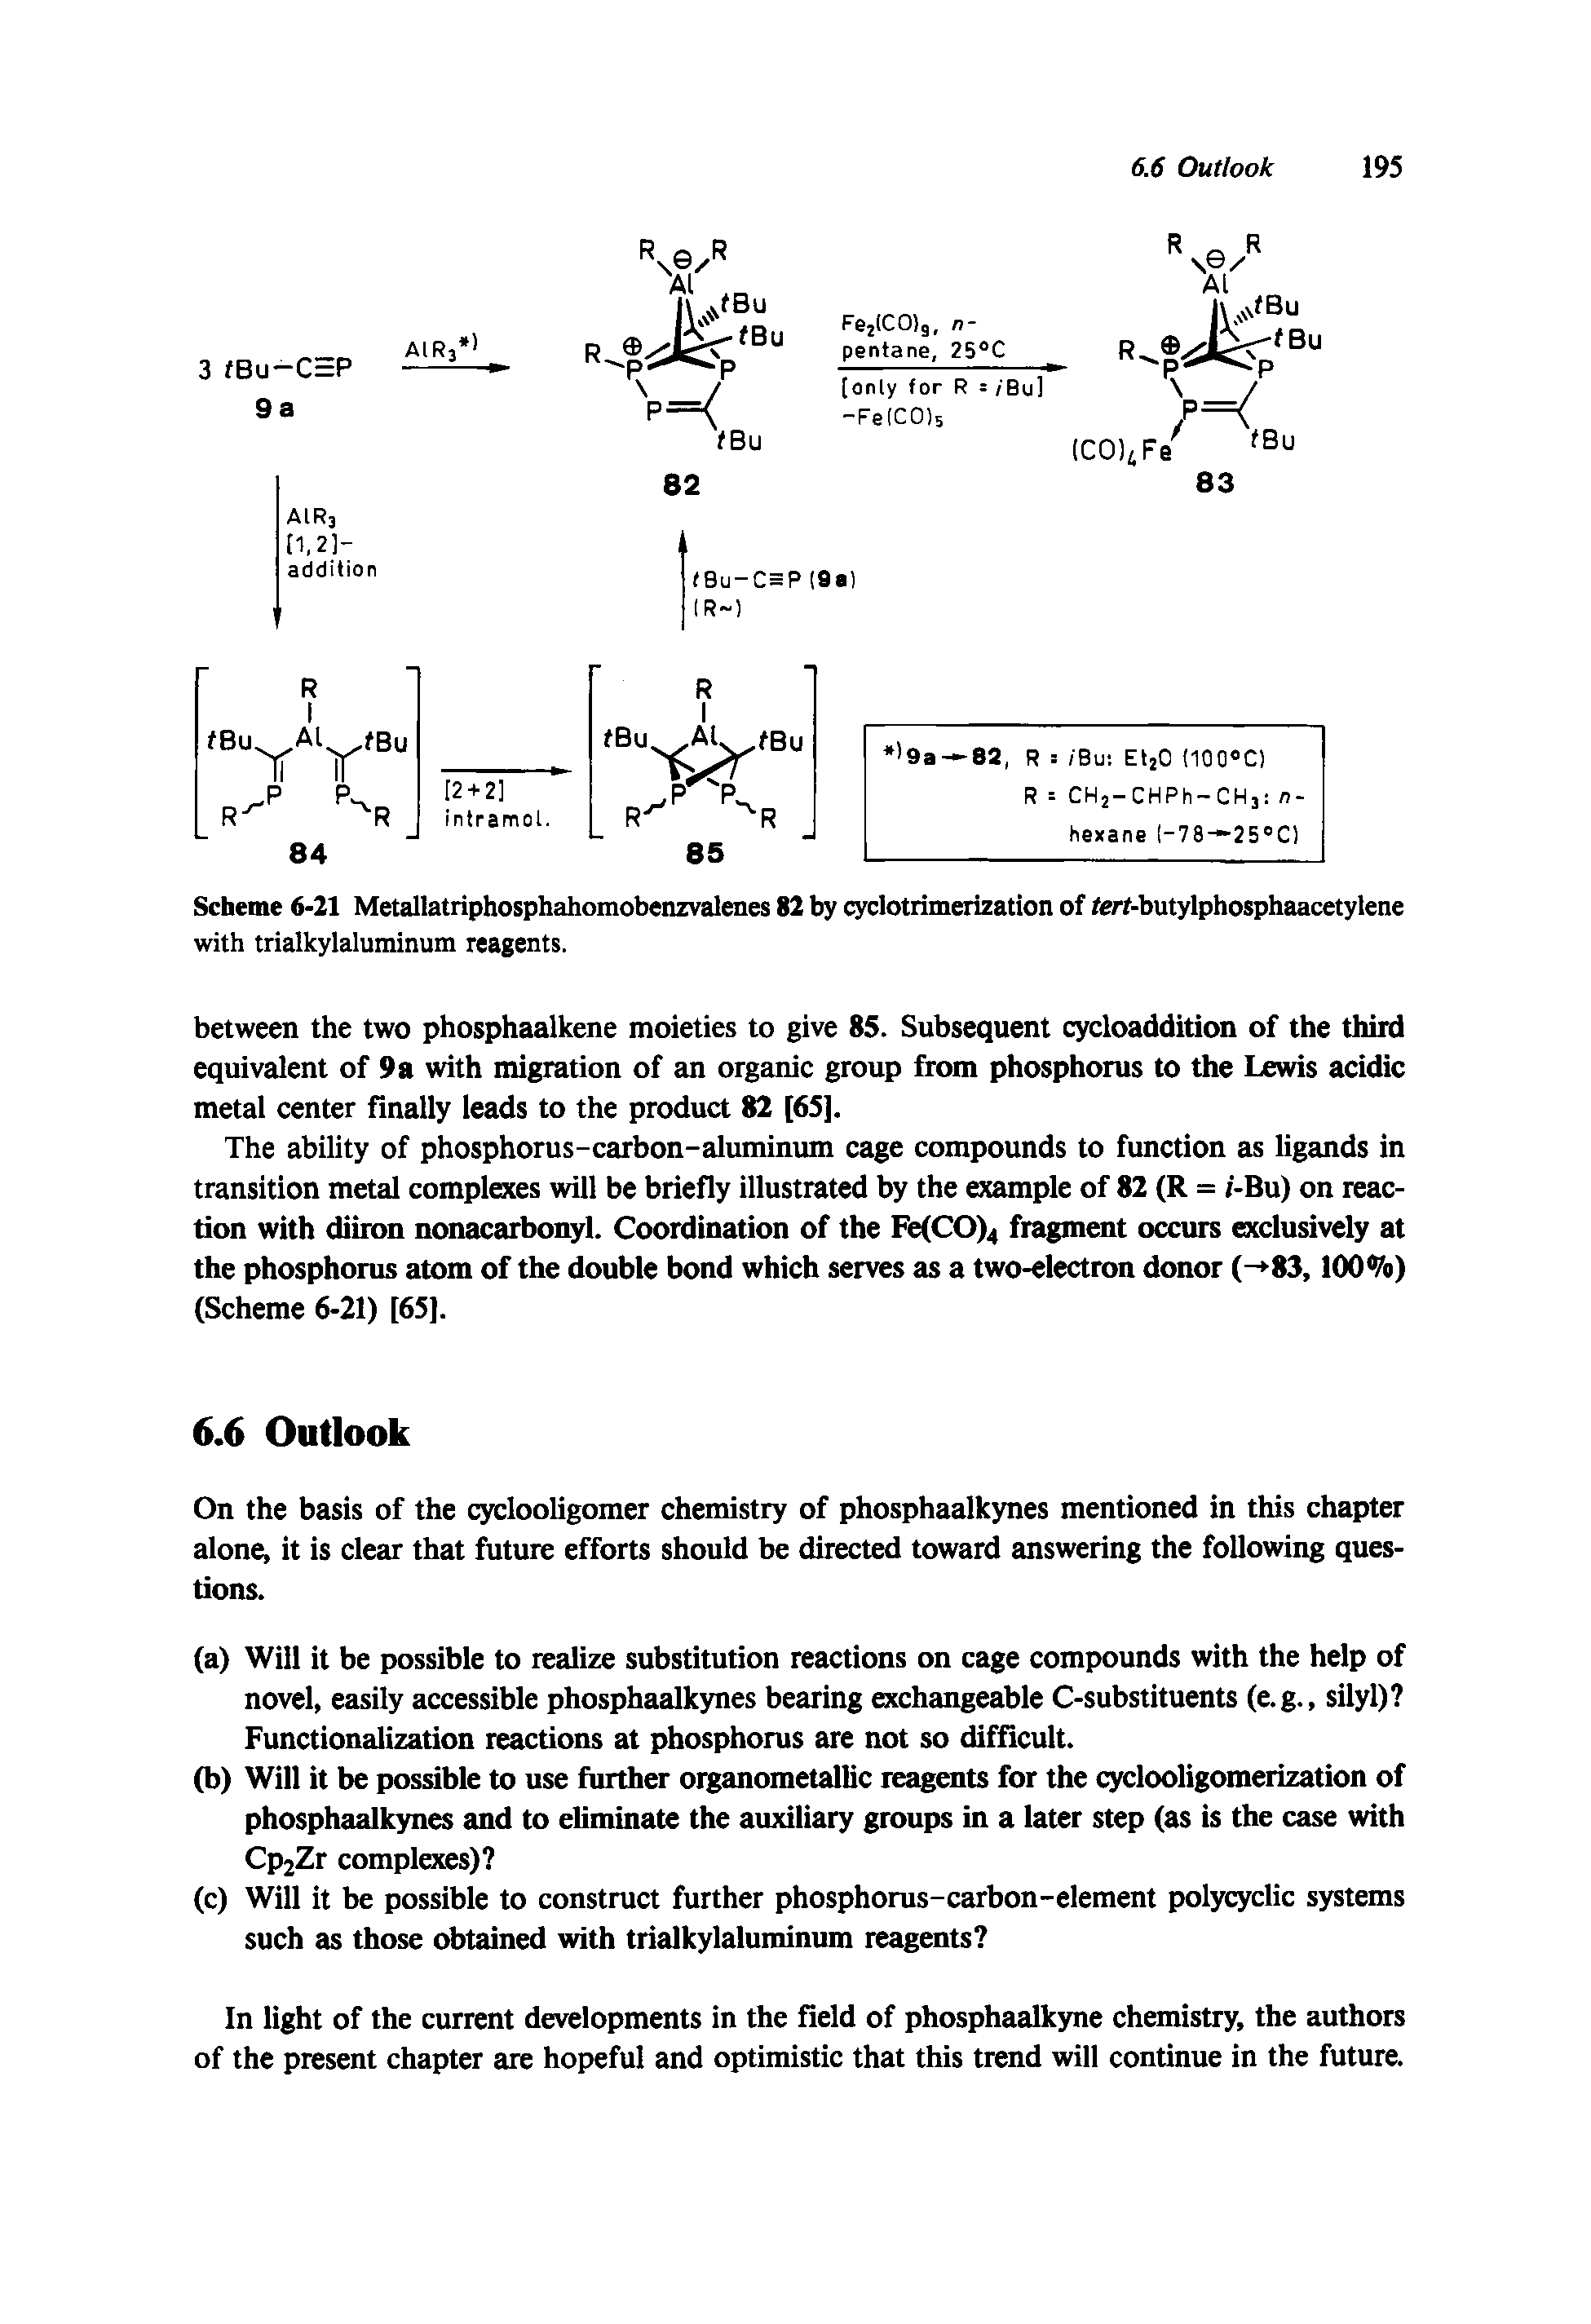 Scheme 6-21 Metallatriphosphahomobenzvalenes 82 by cyclotrimerization of fer -butylphosphaacetylene with trialkylaluminum reagents.